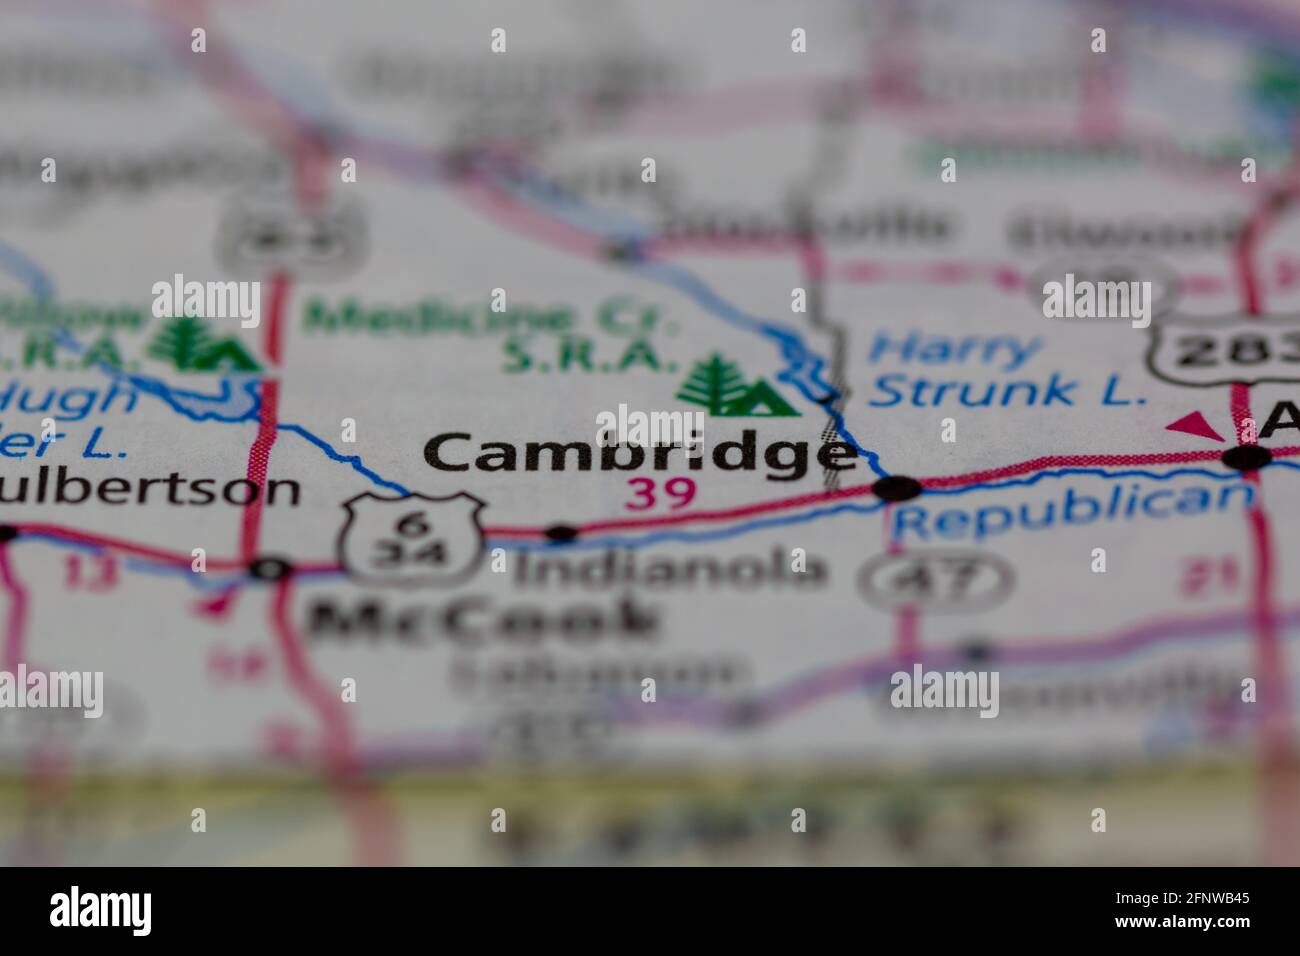 Cambridge Nebraska Usa Shown On A Geography Map Or Road Map 2FNWB45 